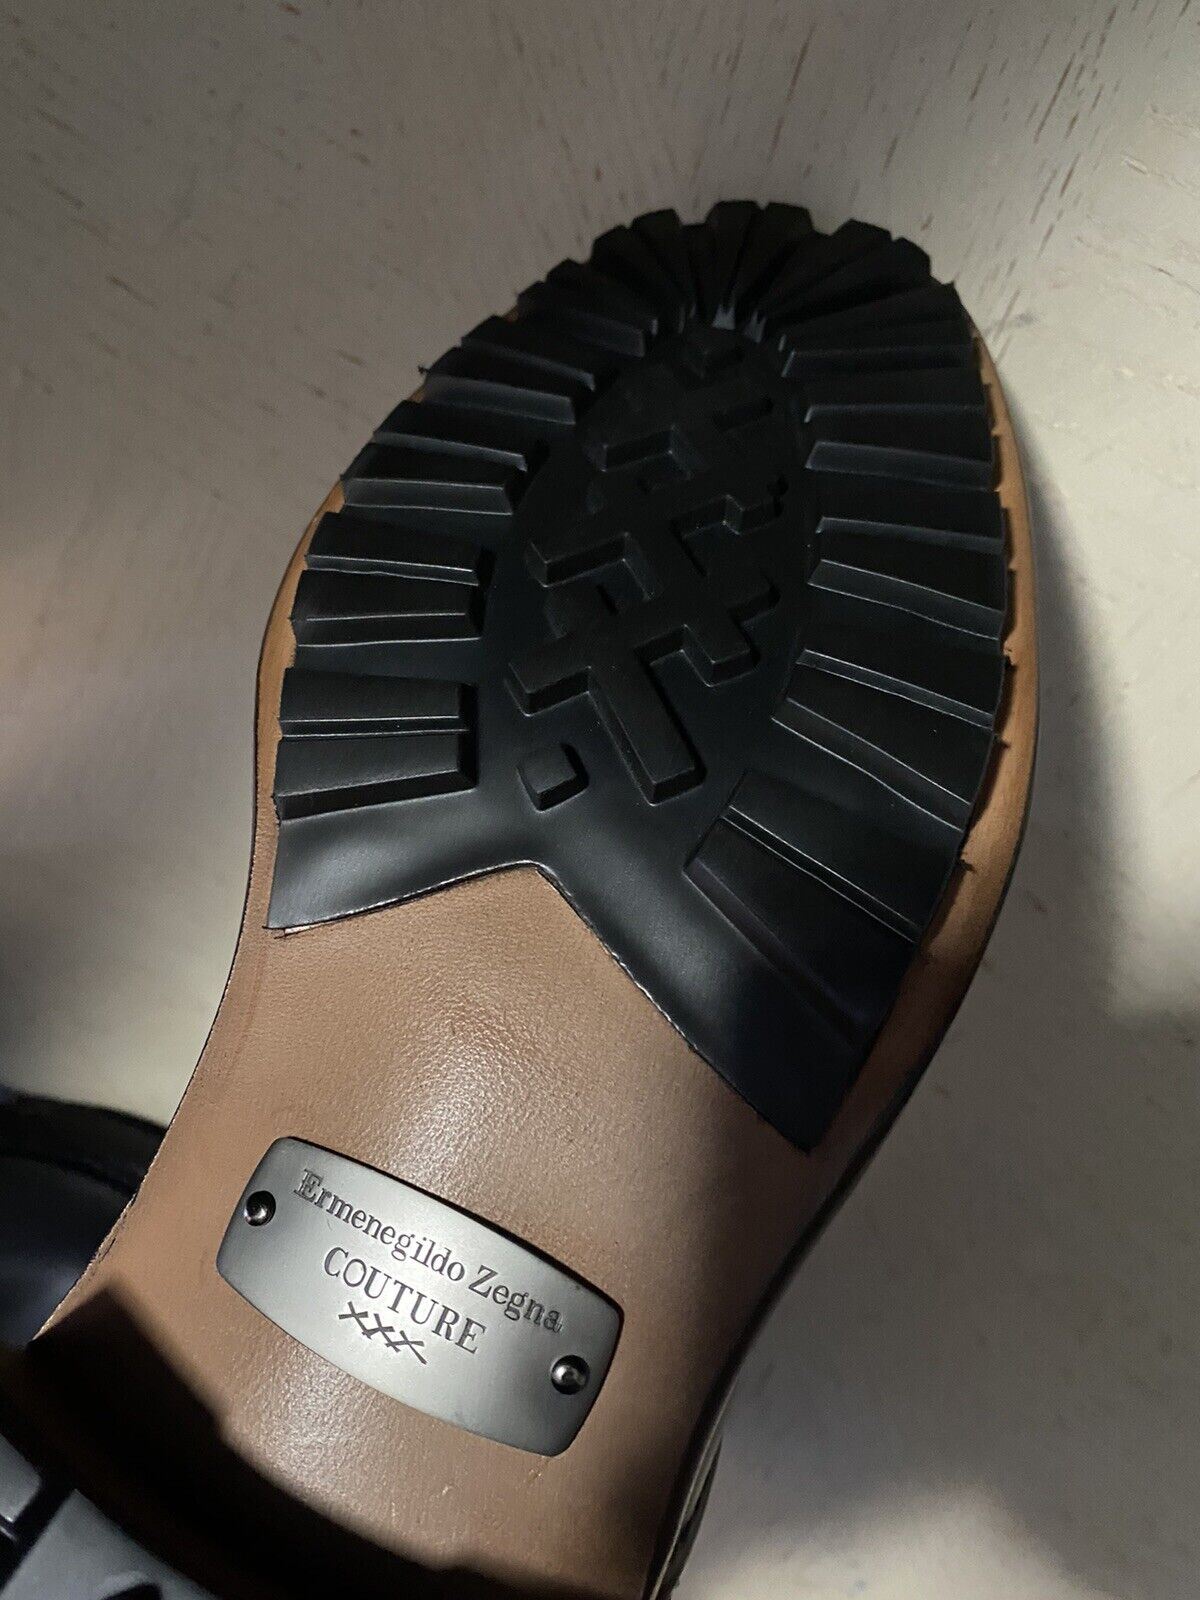 Neu $ 1595 Ermenegildo Zegna Couture Kalbsleder Stiefel Schuhe MD Grau 11 US